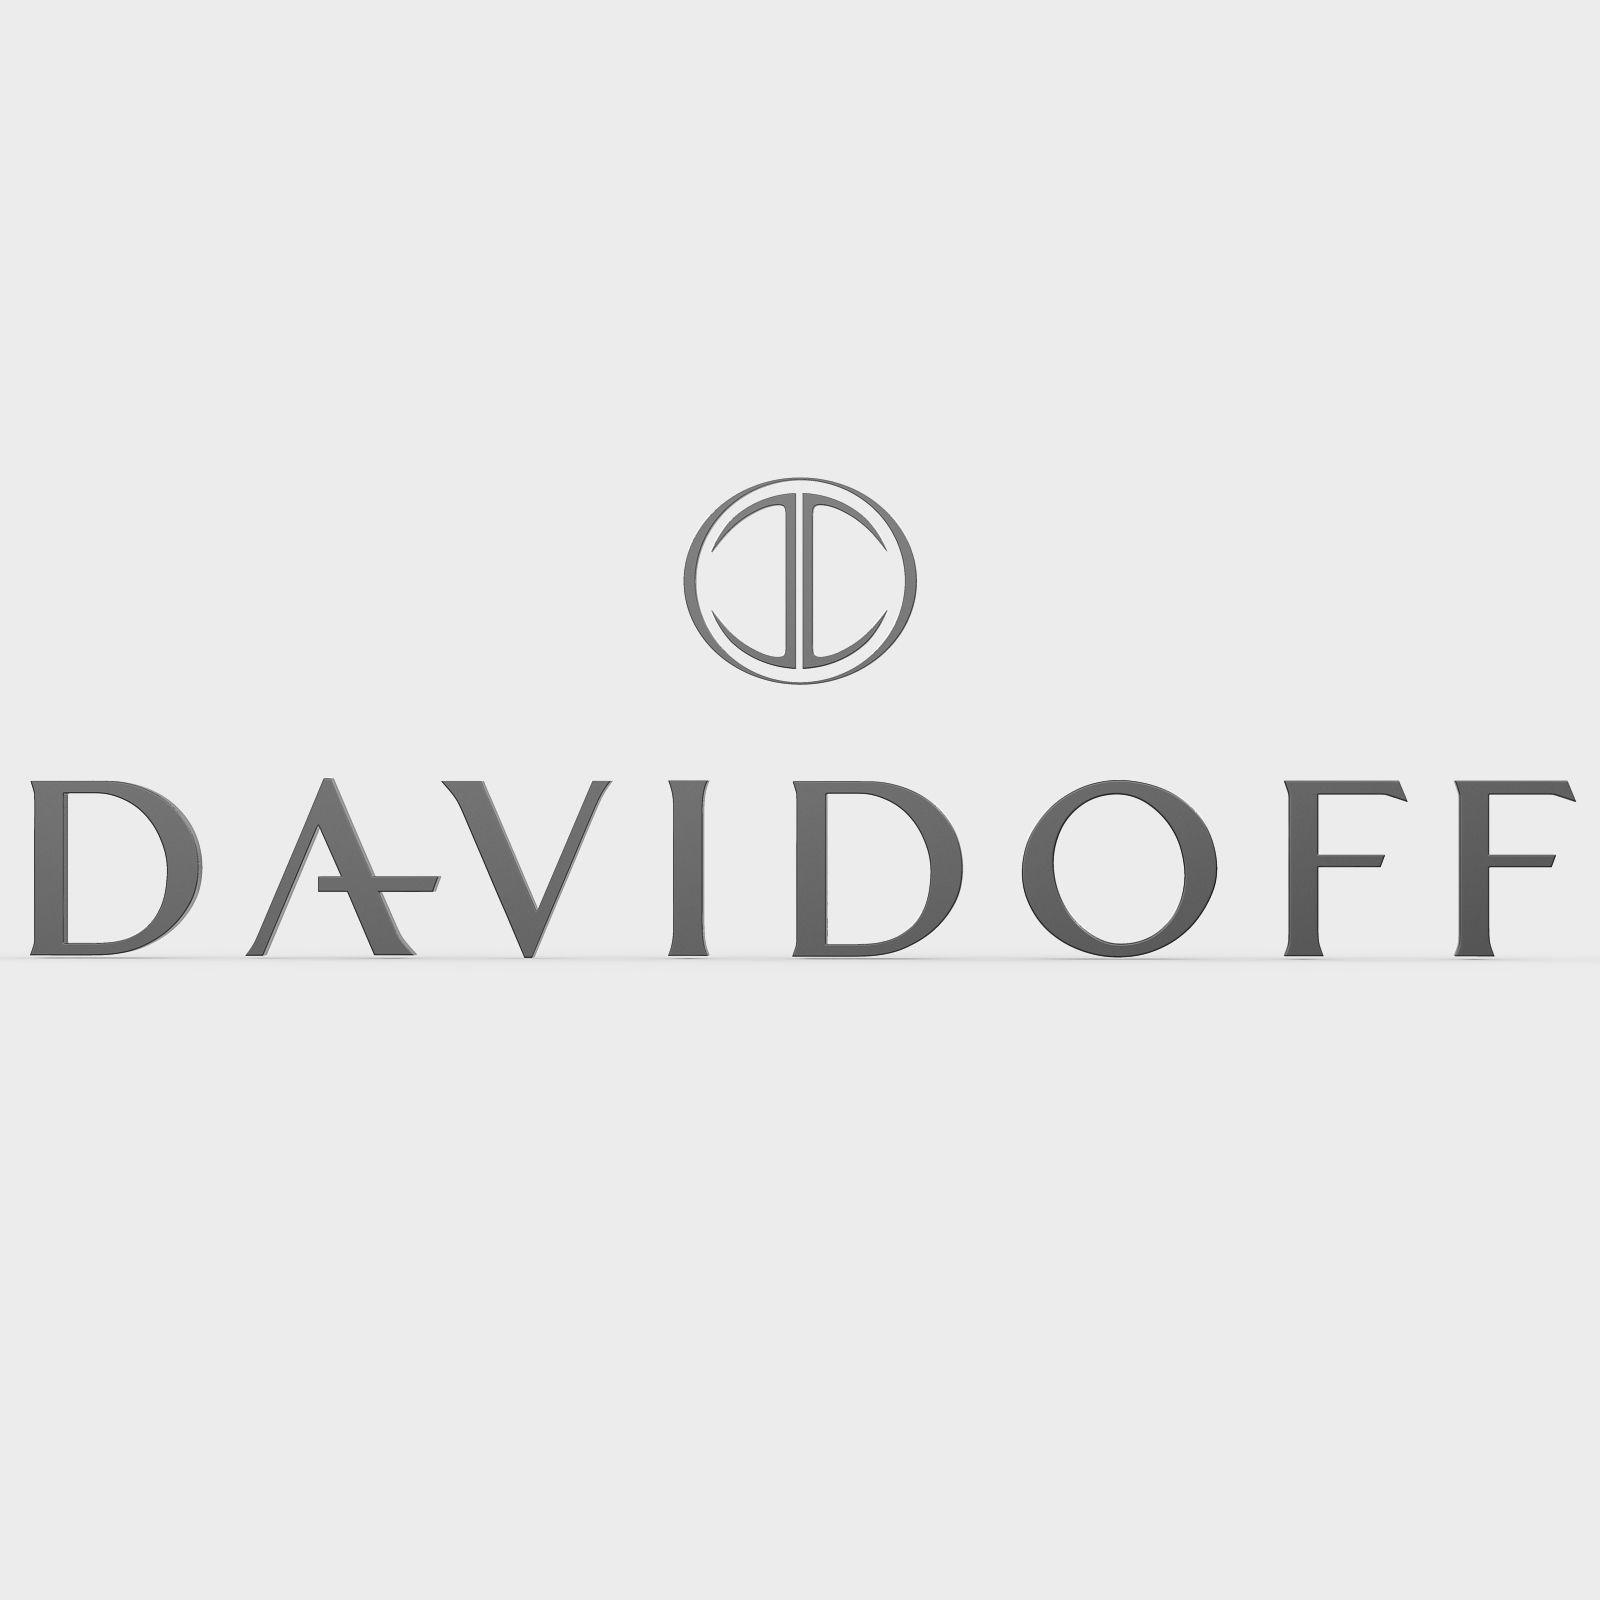 Davidoff Logo - davidoff logo 3D model